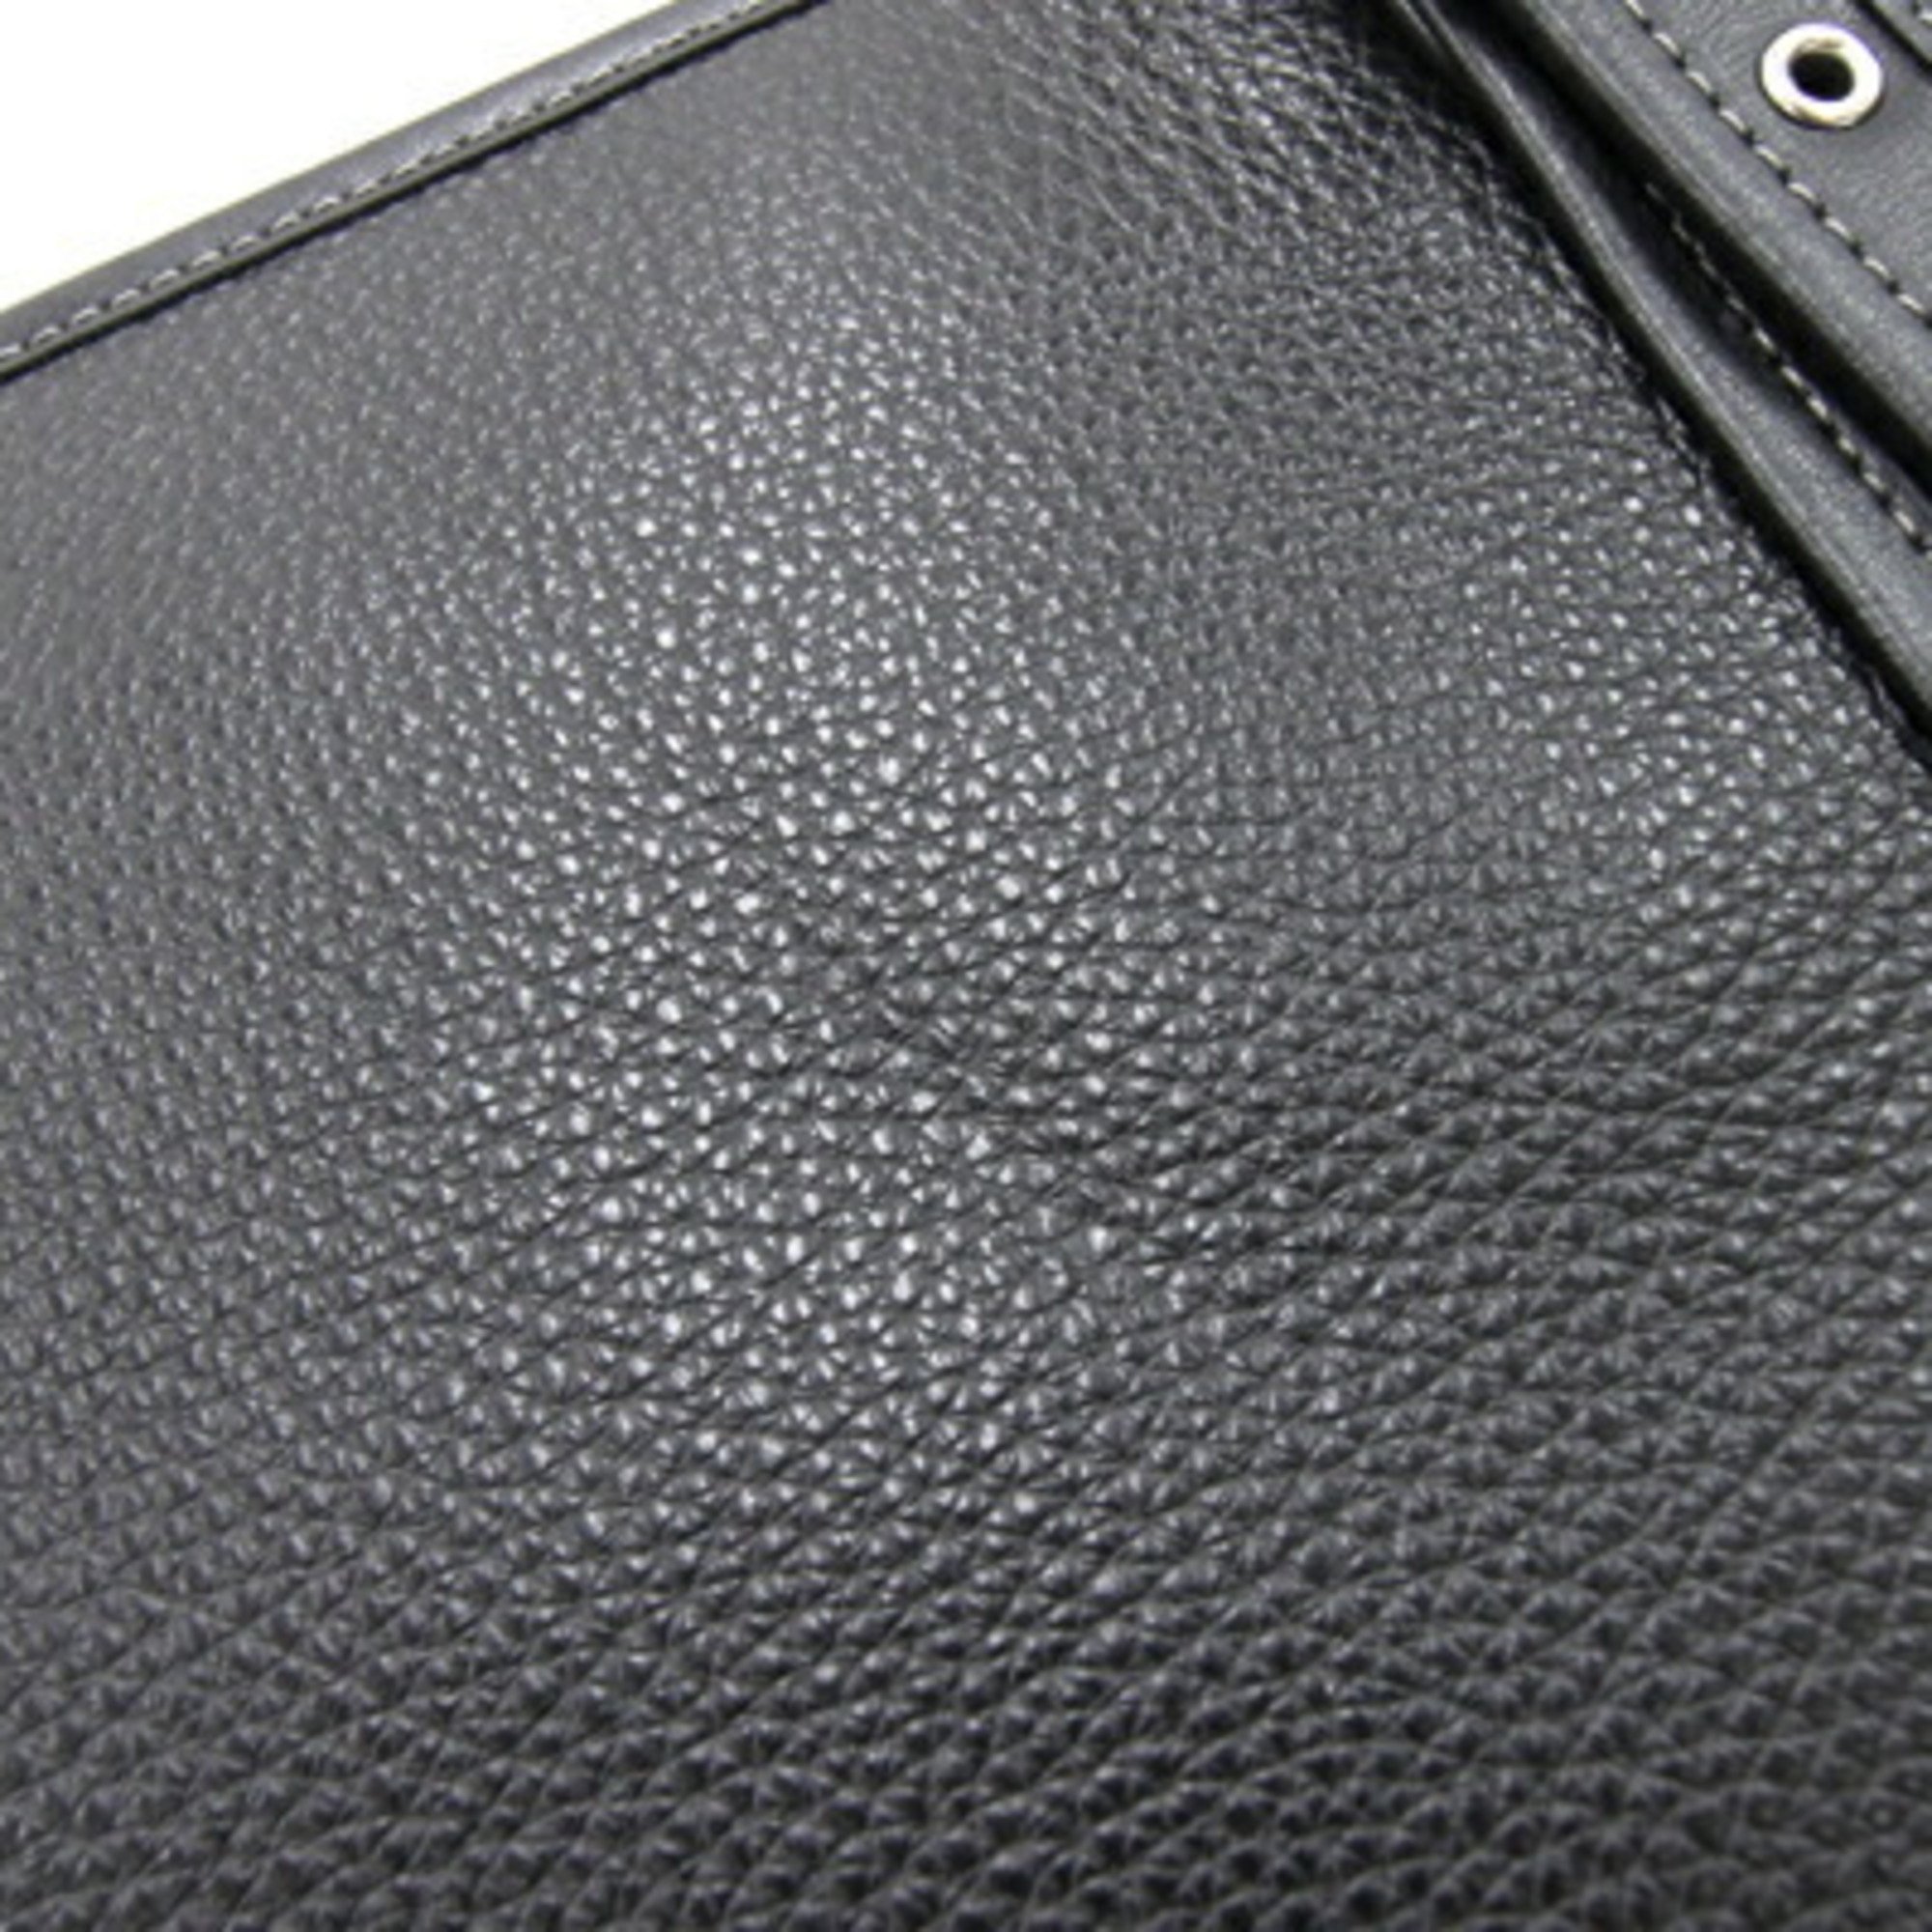 Coach Tote Bag Ashton Zip Top CN327 Black Leather Shoulder A Storage Women's COACH